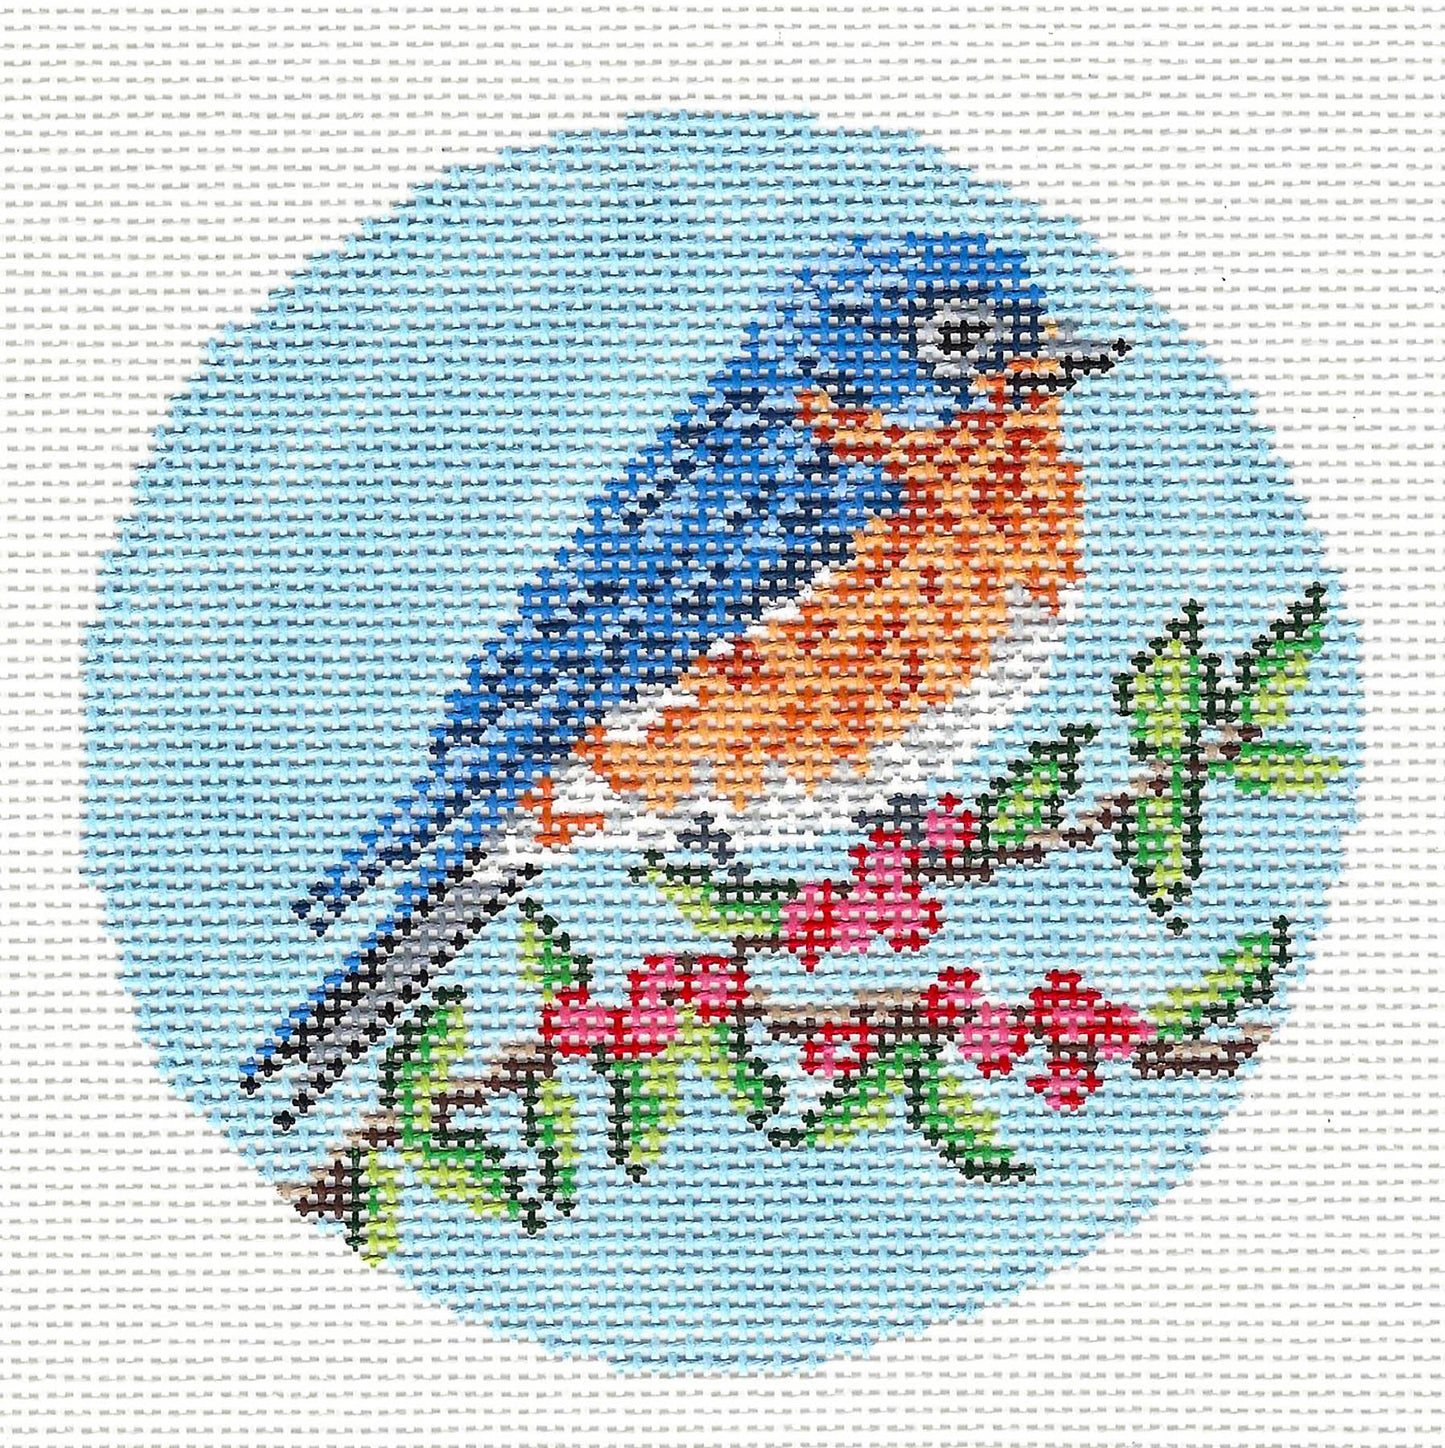 Bird canvas ~ Elegant Eastern Bluebird 4" Round Ornament handpainted 18 mesh Needlepoint Canvas by Needle Crossings